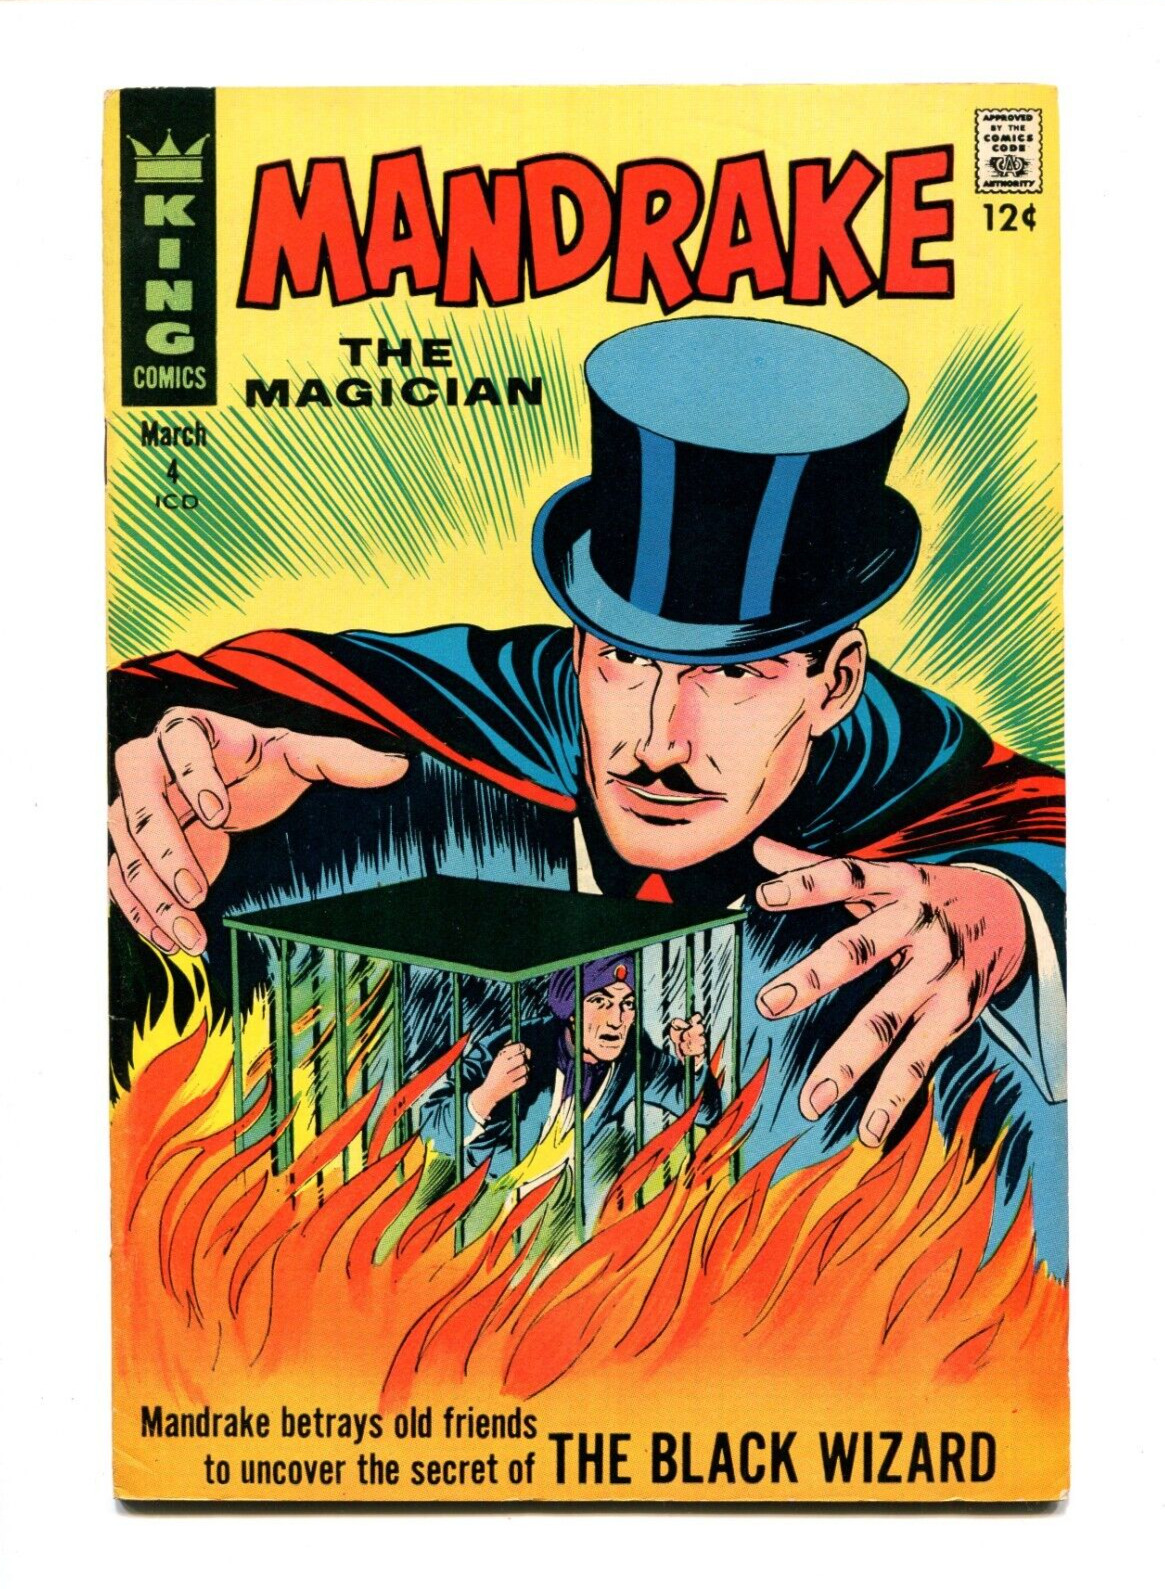 Mandrake the Magician #4 - Andre LeBlanc Art + Cover (7.0) 1967